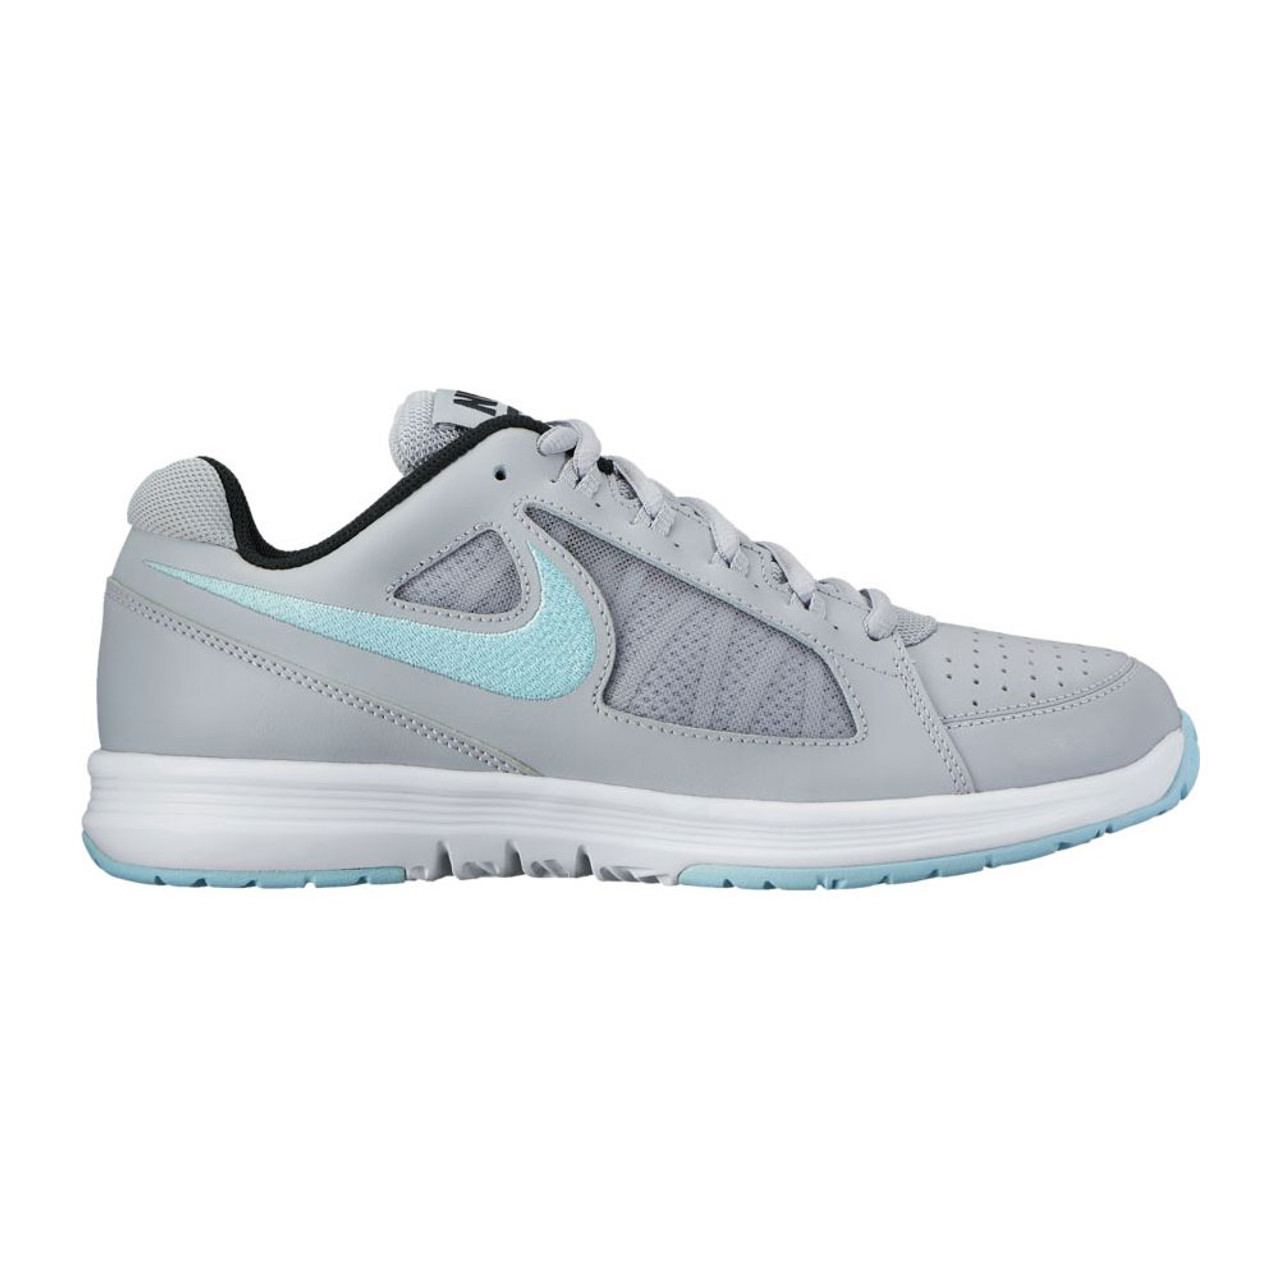 Nike Women's Air Vapor Ace Tennis Shoe - Grey | Discount Nike Ladies  Athletic & More - Shoolu.com | Shoolu.com